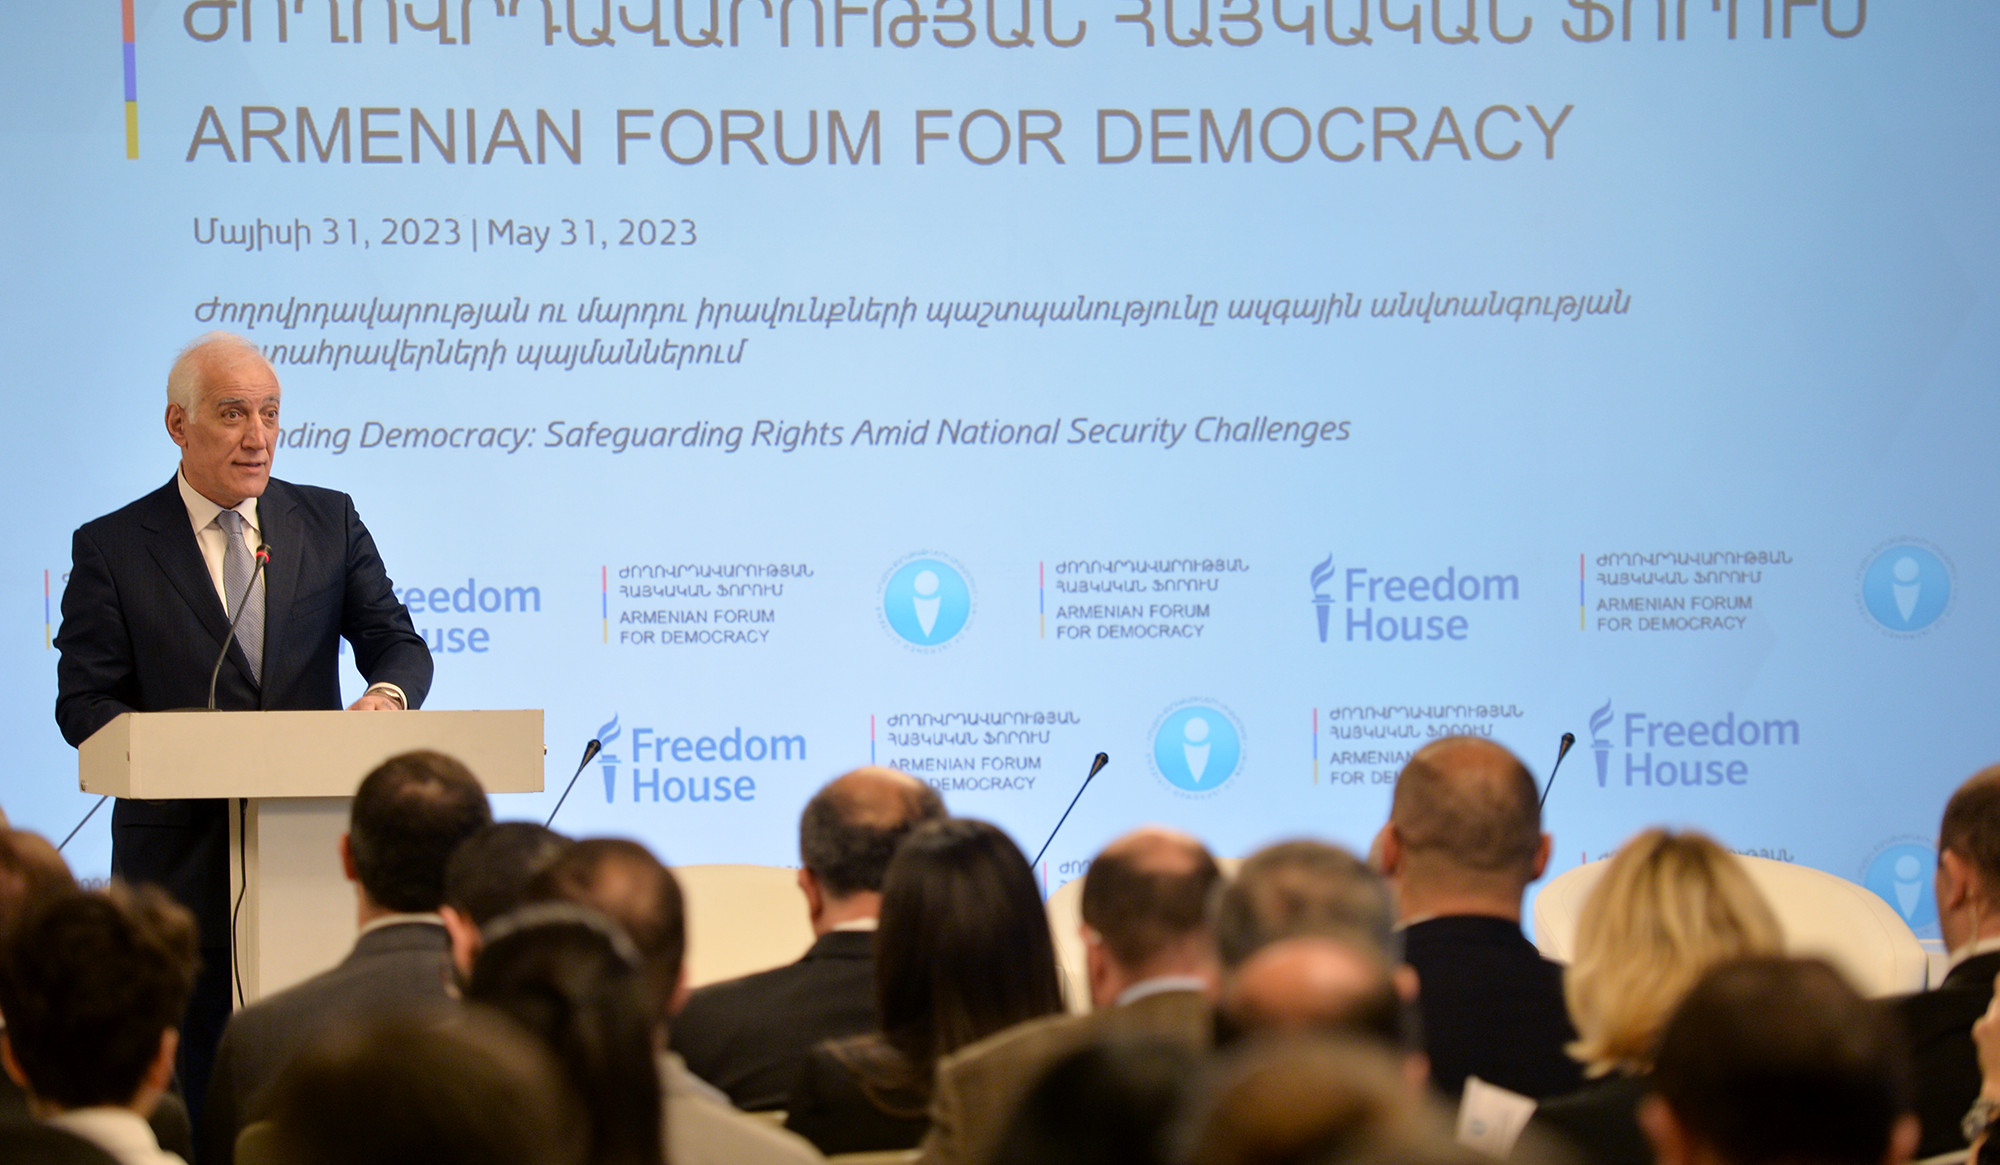 President Vahagn Khachaturyan’s speech at opening of Armenian Forum for Democracy